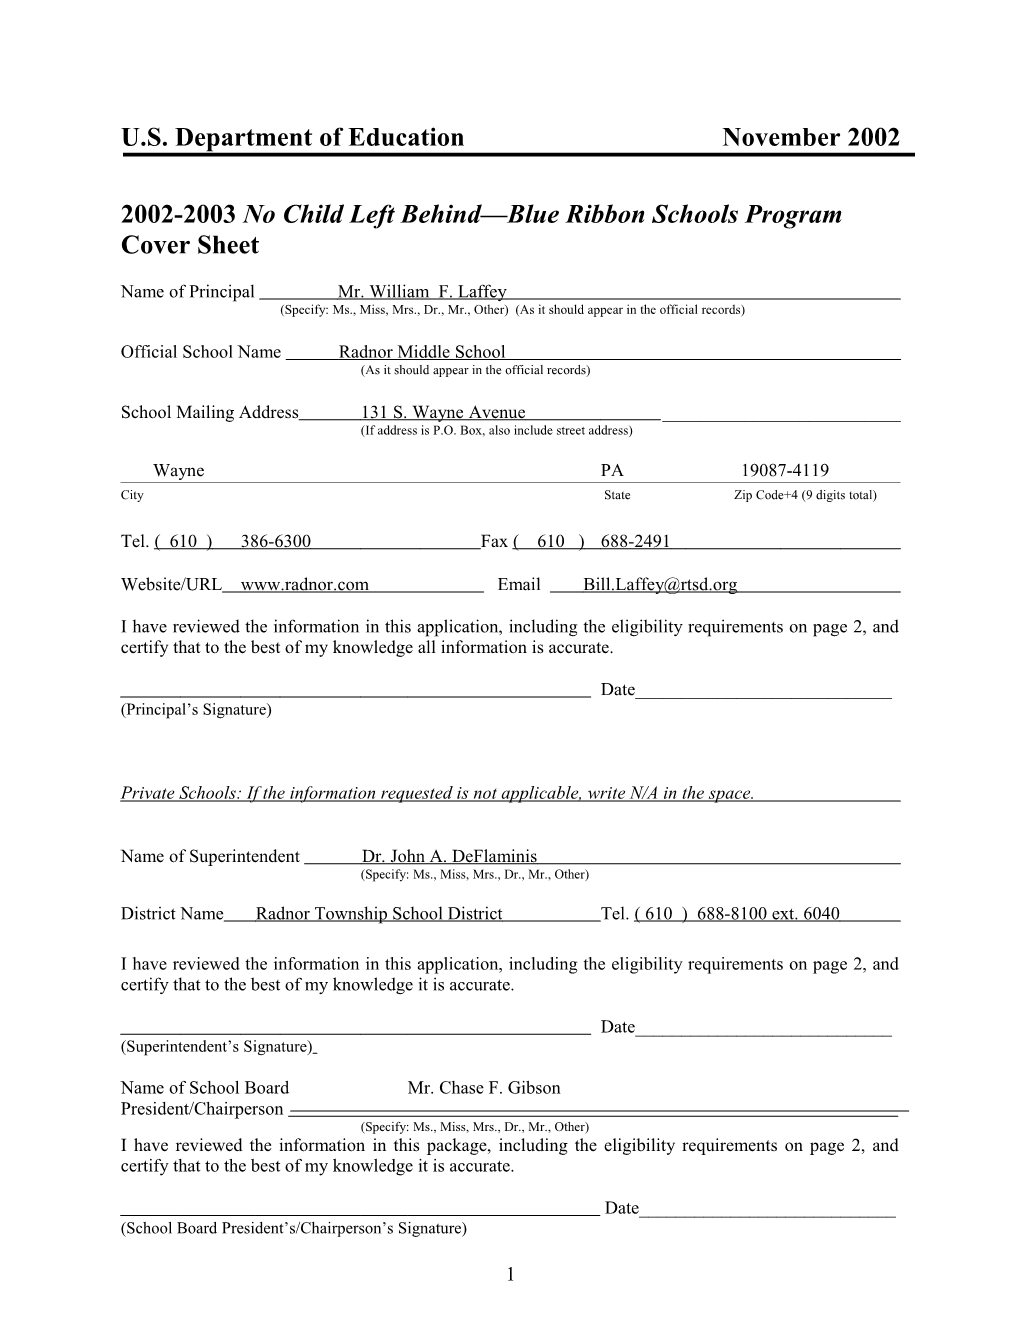 Radnor Middle School 2003 No Child Left Behind-Blue Ribbon School (Msword)